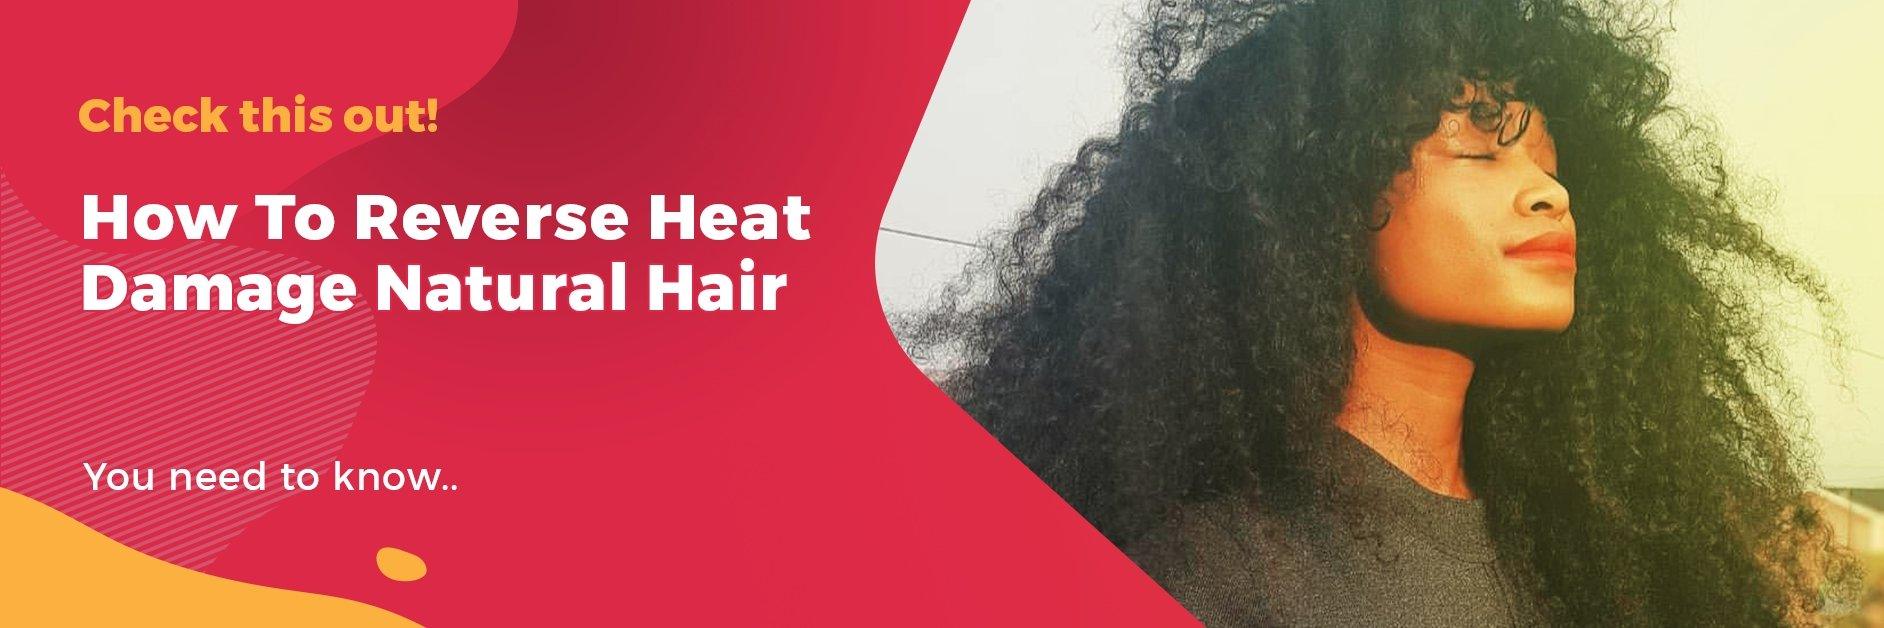 How To Reverse Heat Damaged Natural Hair - GlammedNaturallyOil